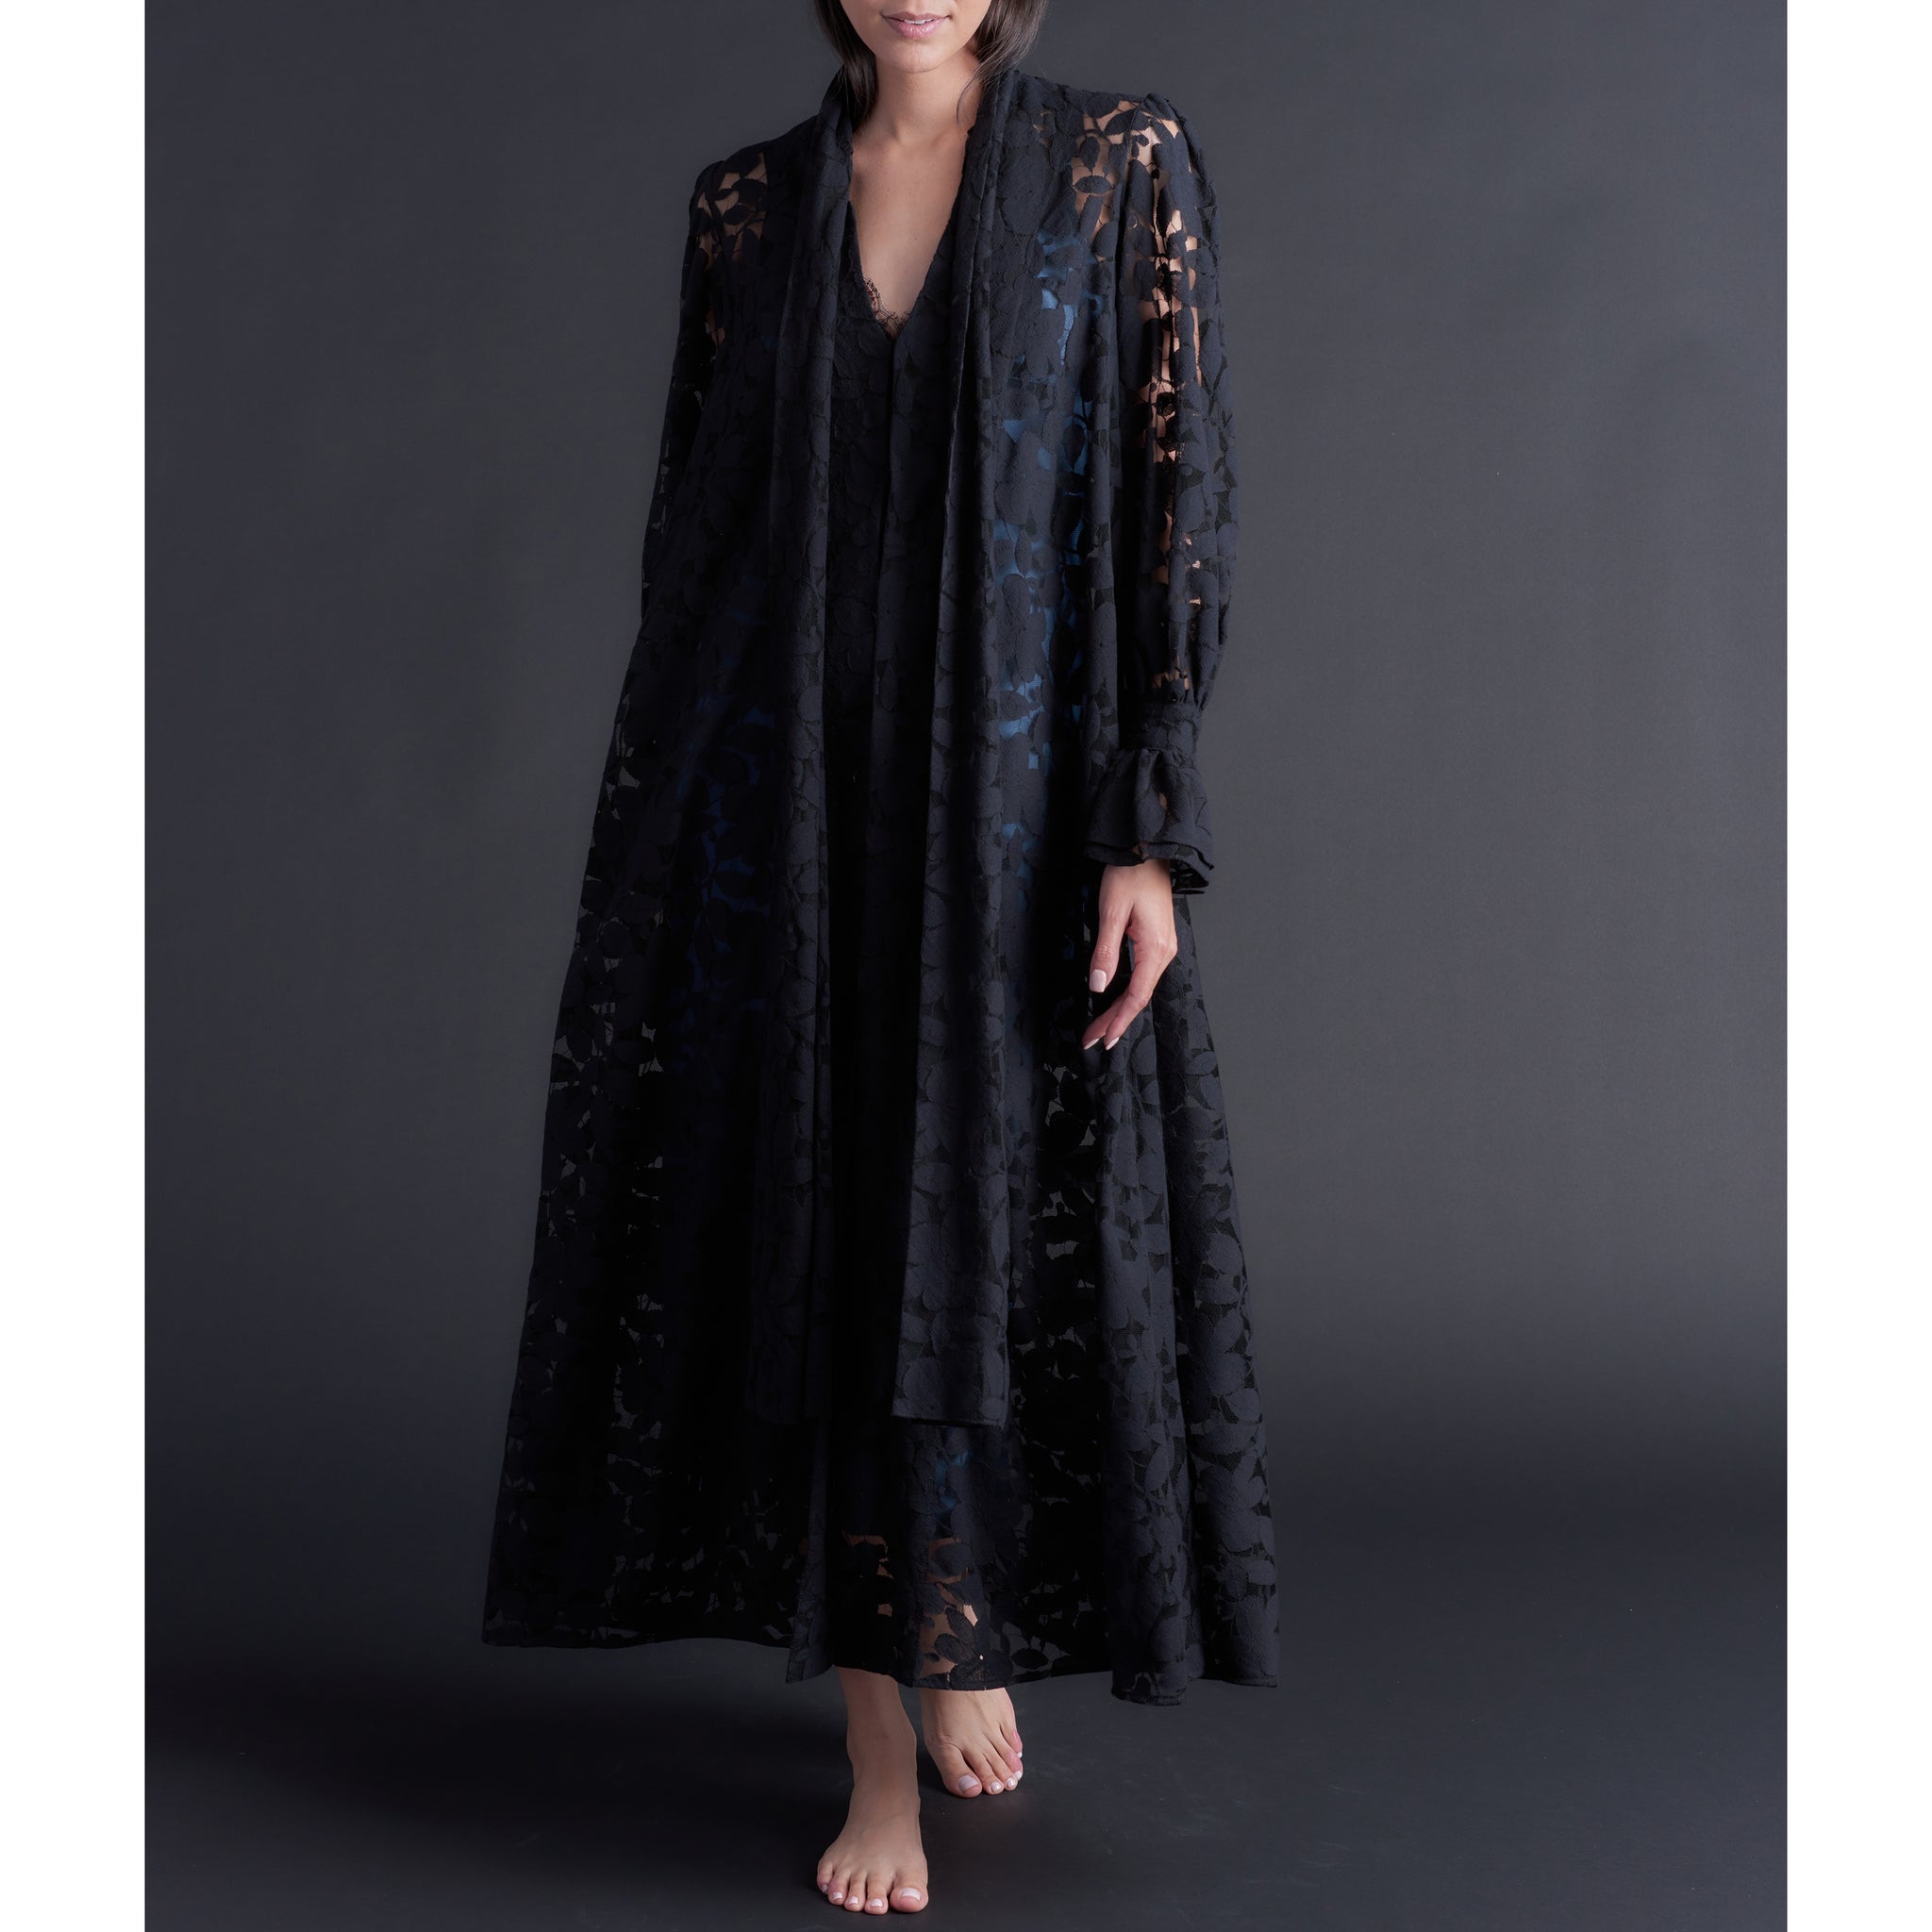 Faye Duster Dress in Black Cotton Lace